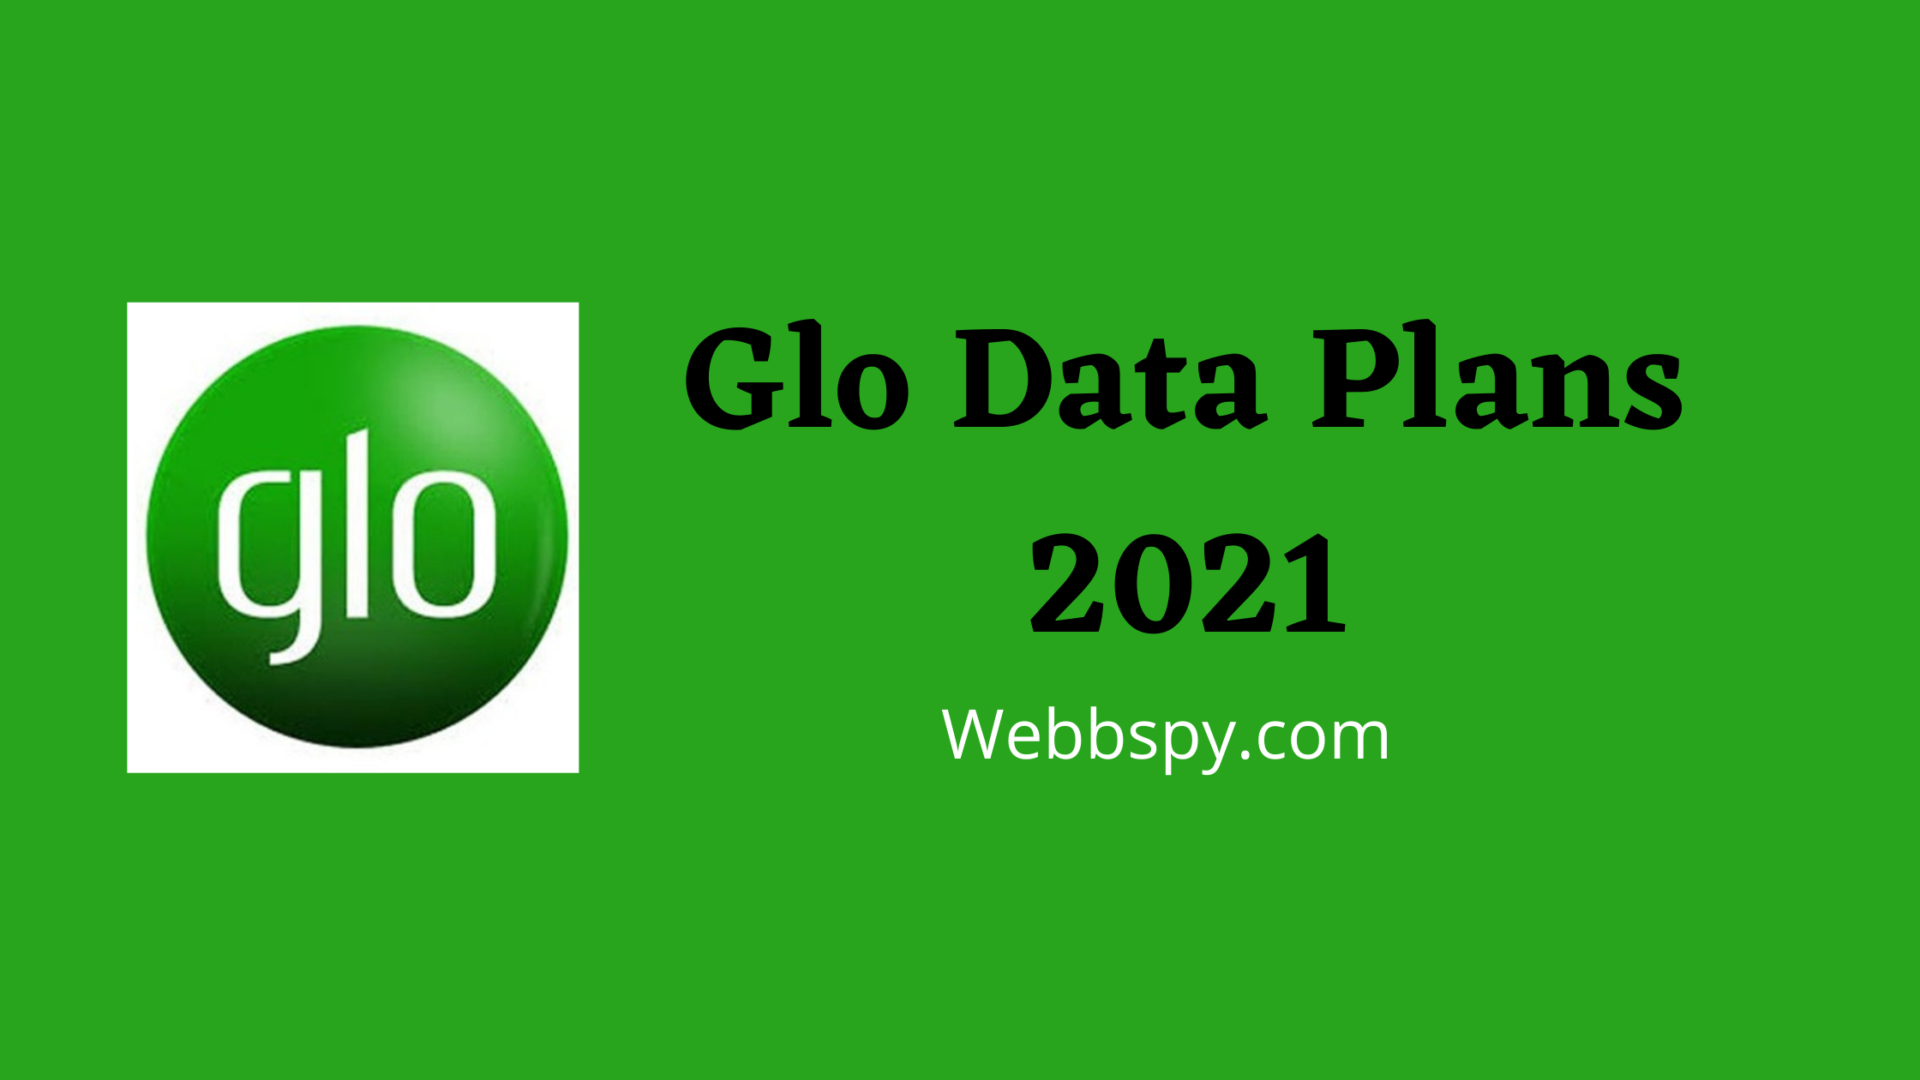 Glo Data Plans 2021 1920x1080 